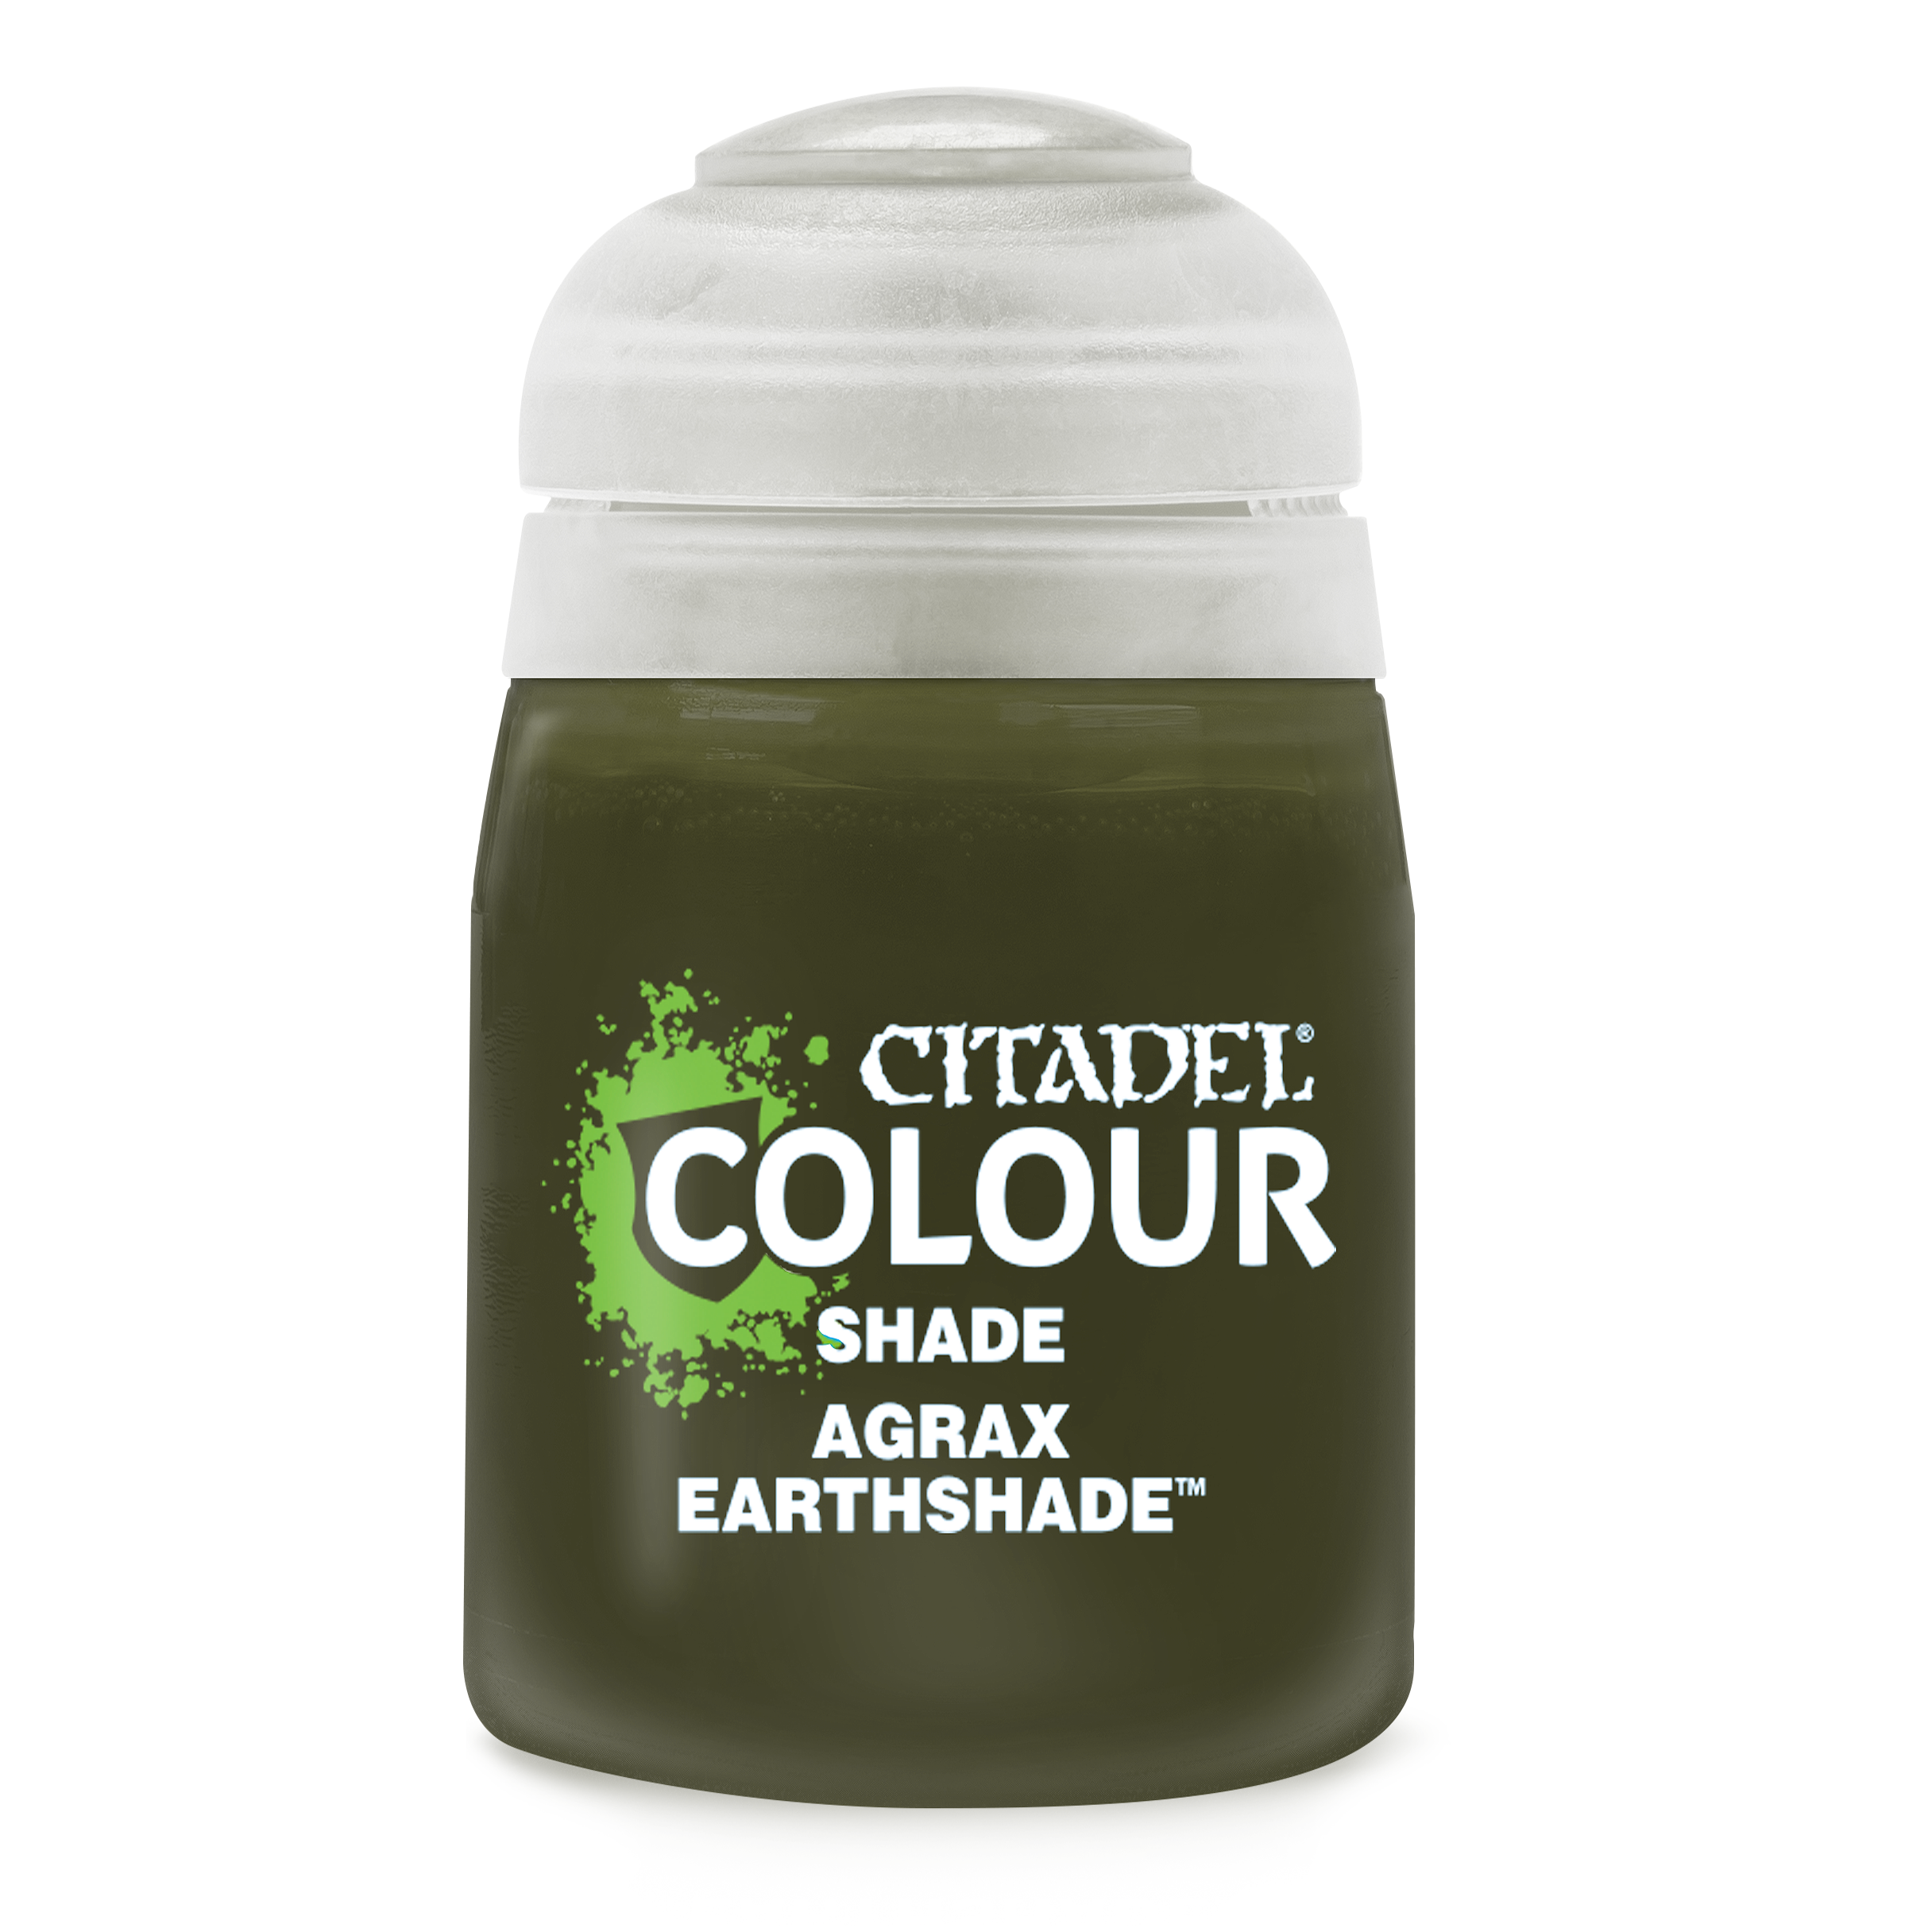 Agrax Earthshade - Citadel Shade Colour